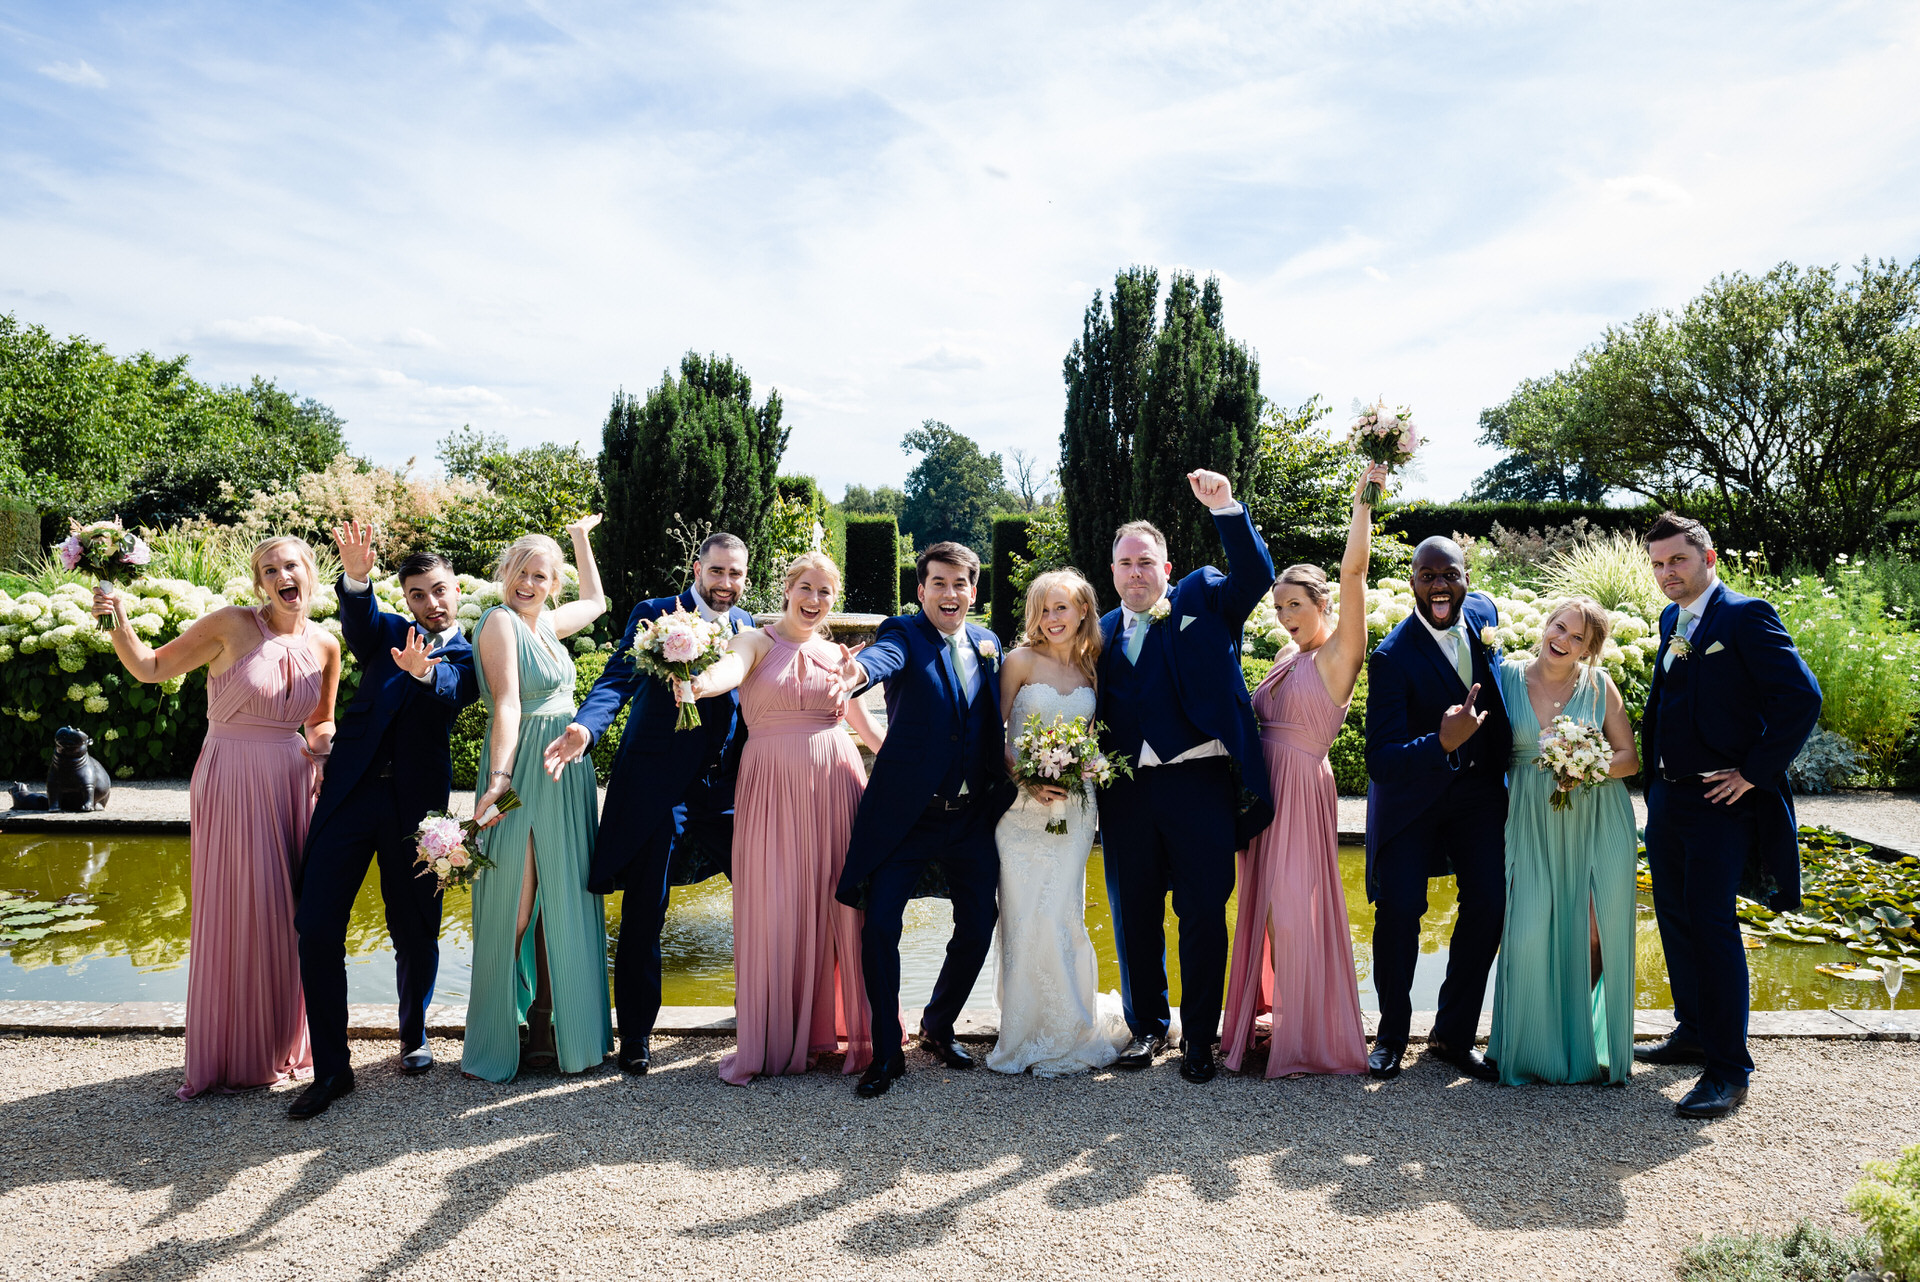 Loseley park wedding group shot